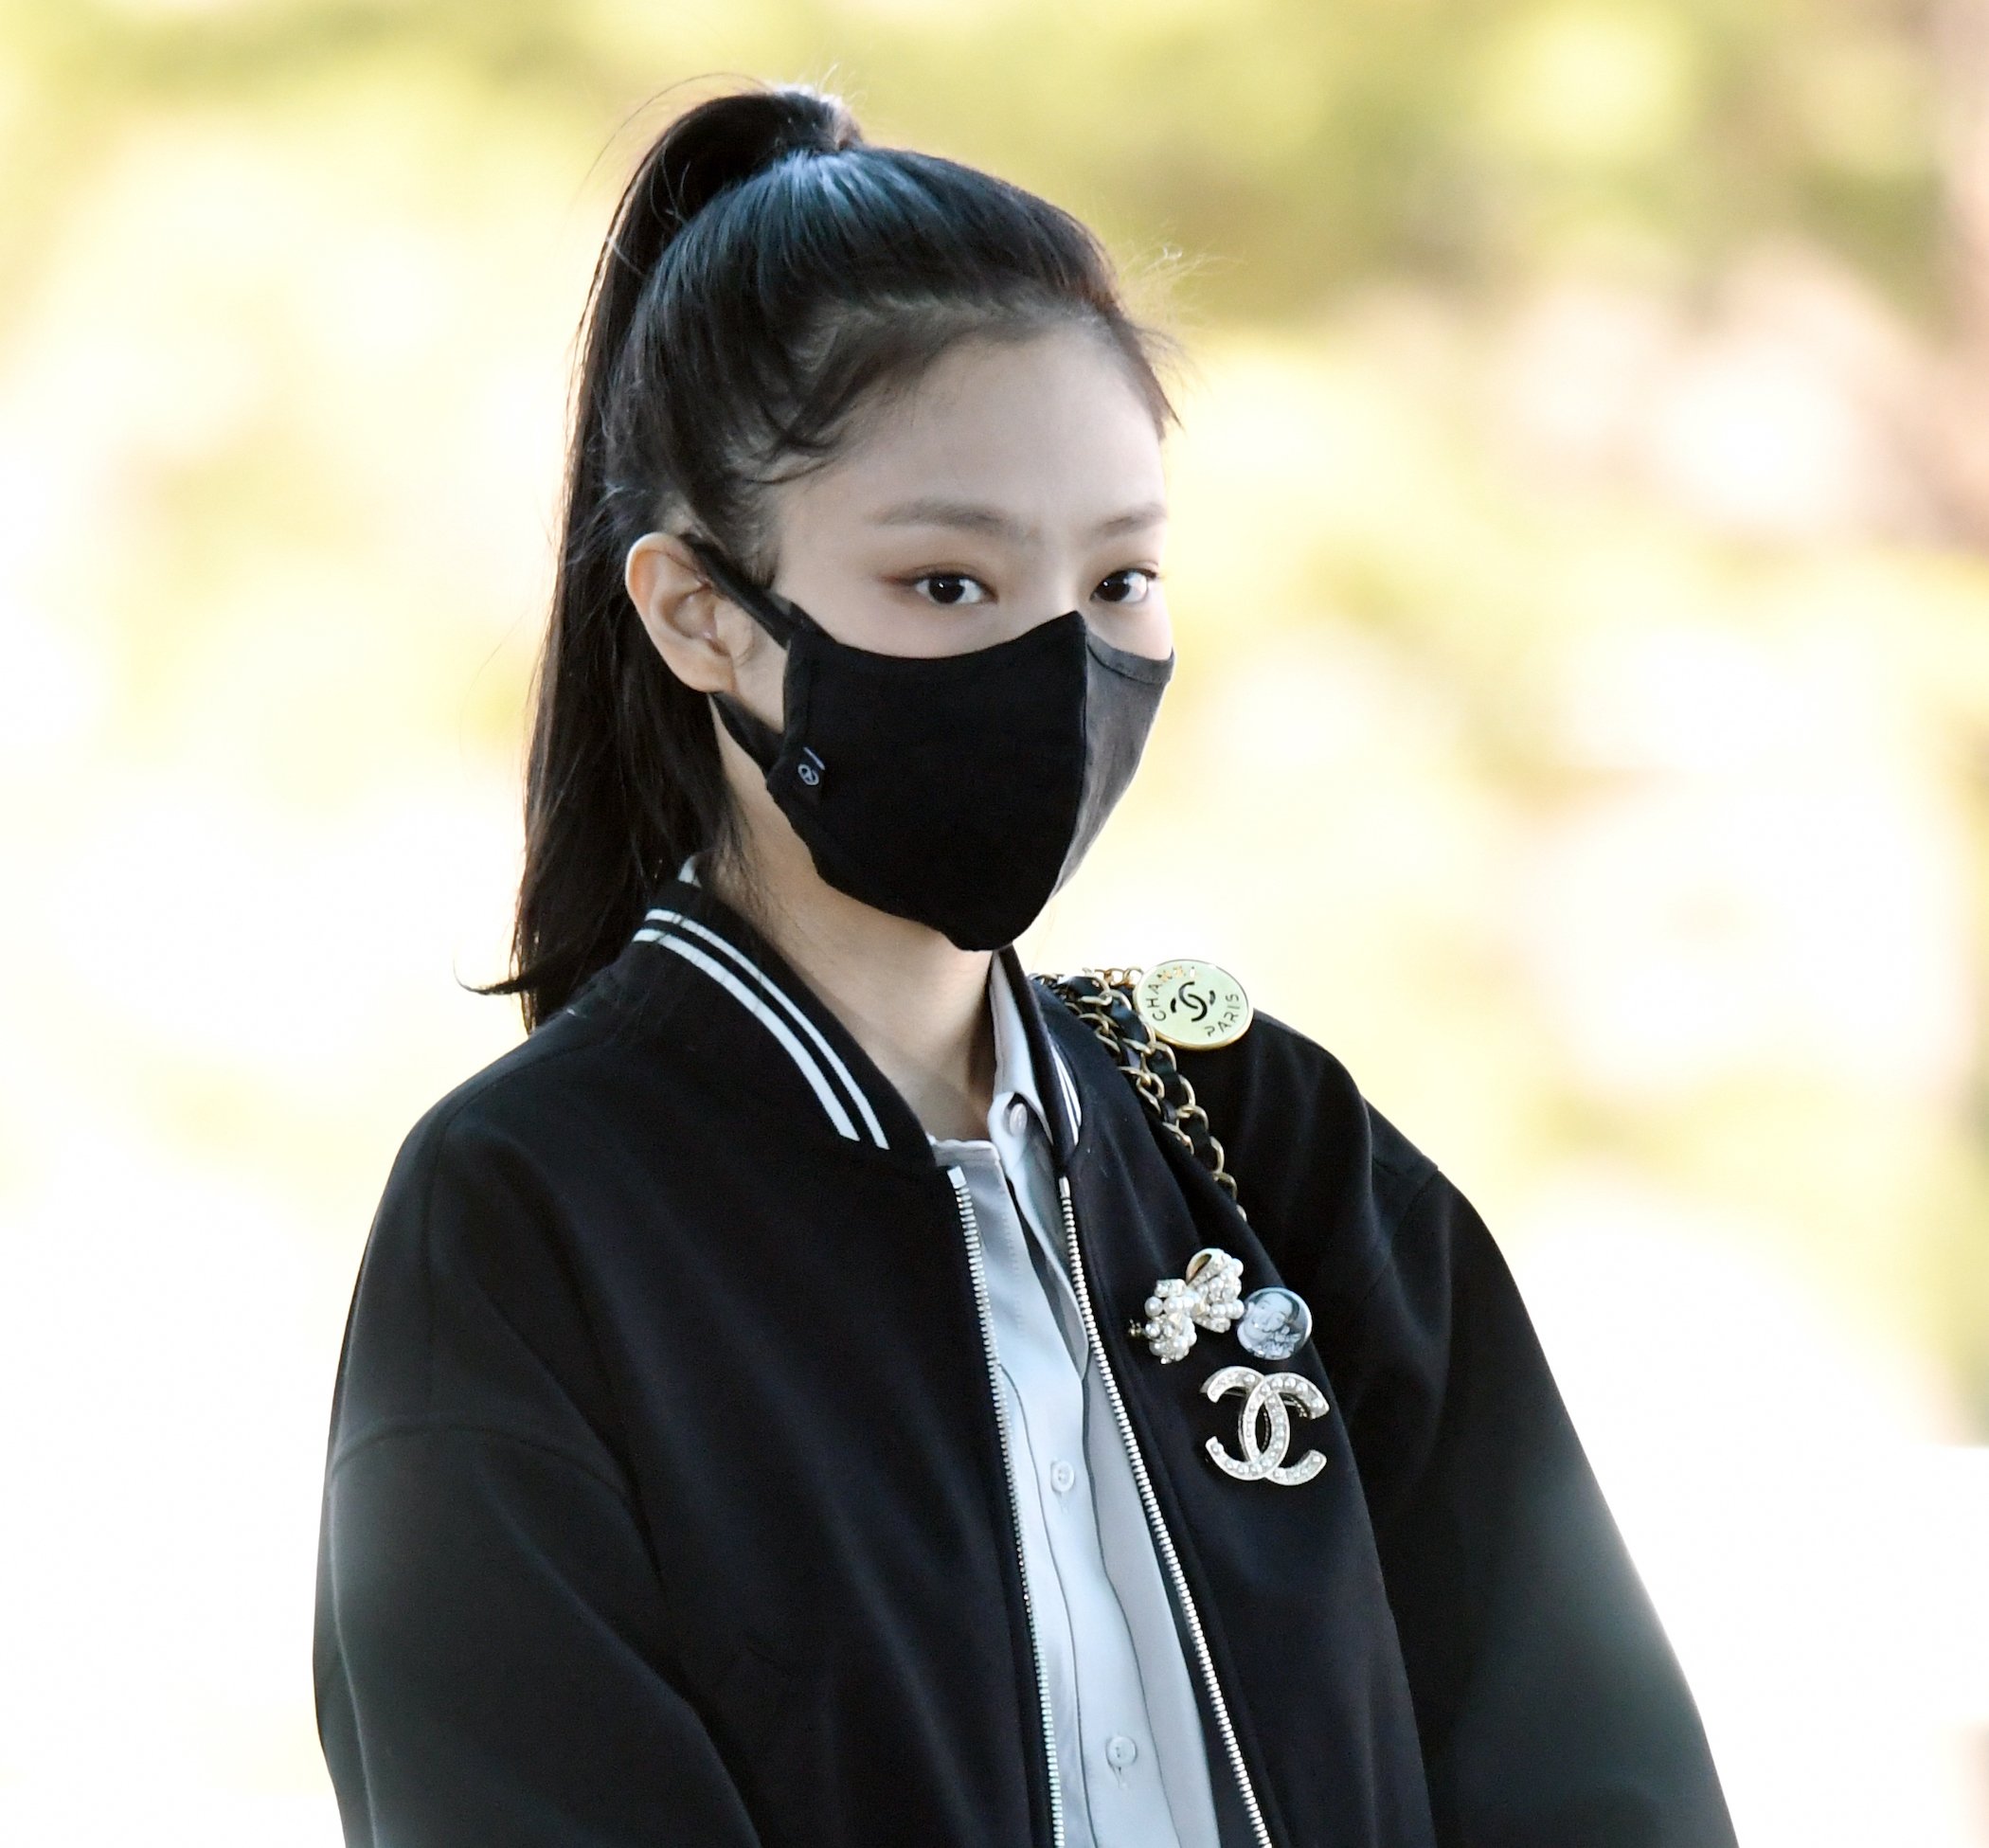 Jennie of BLACKPINK is seen leaving Incheon International Airport